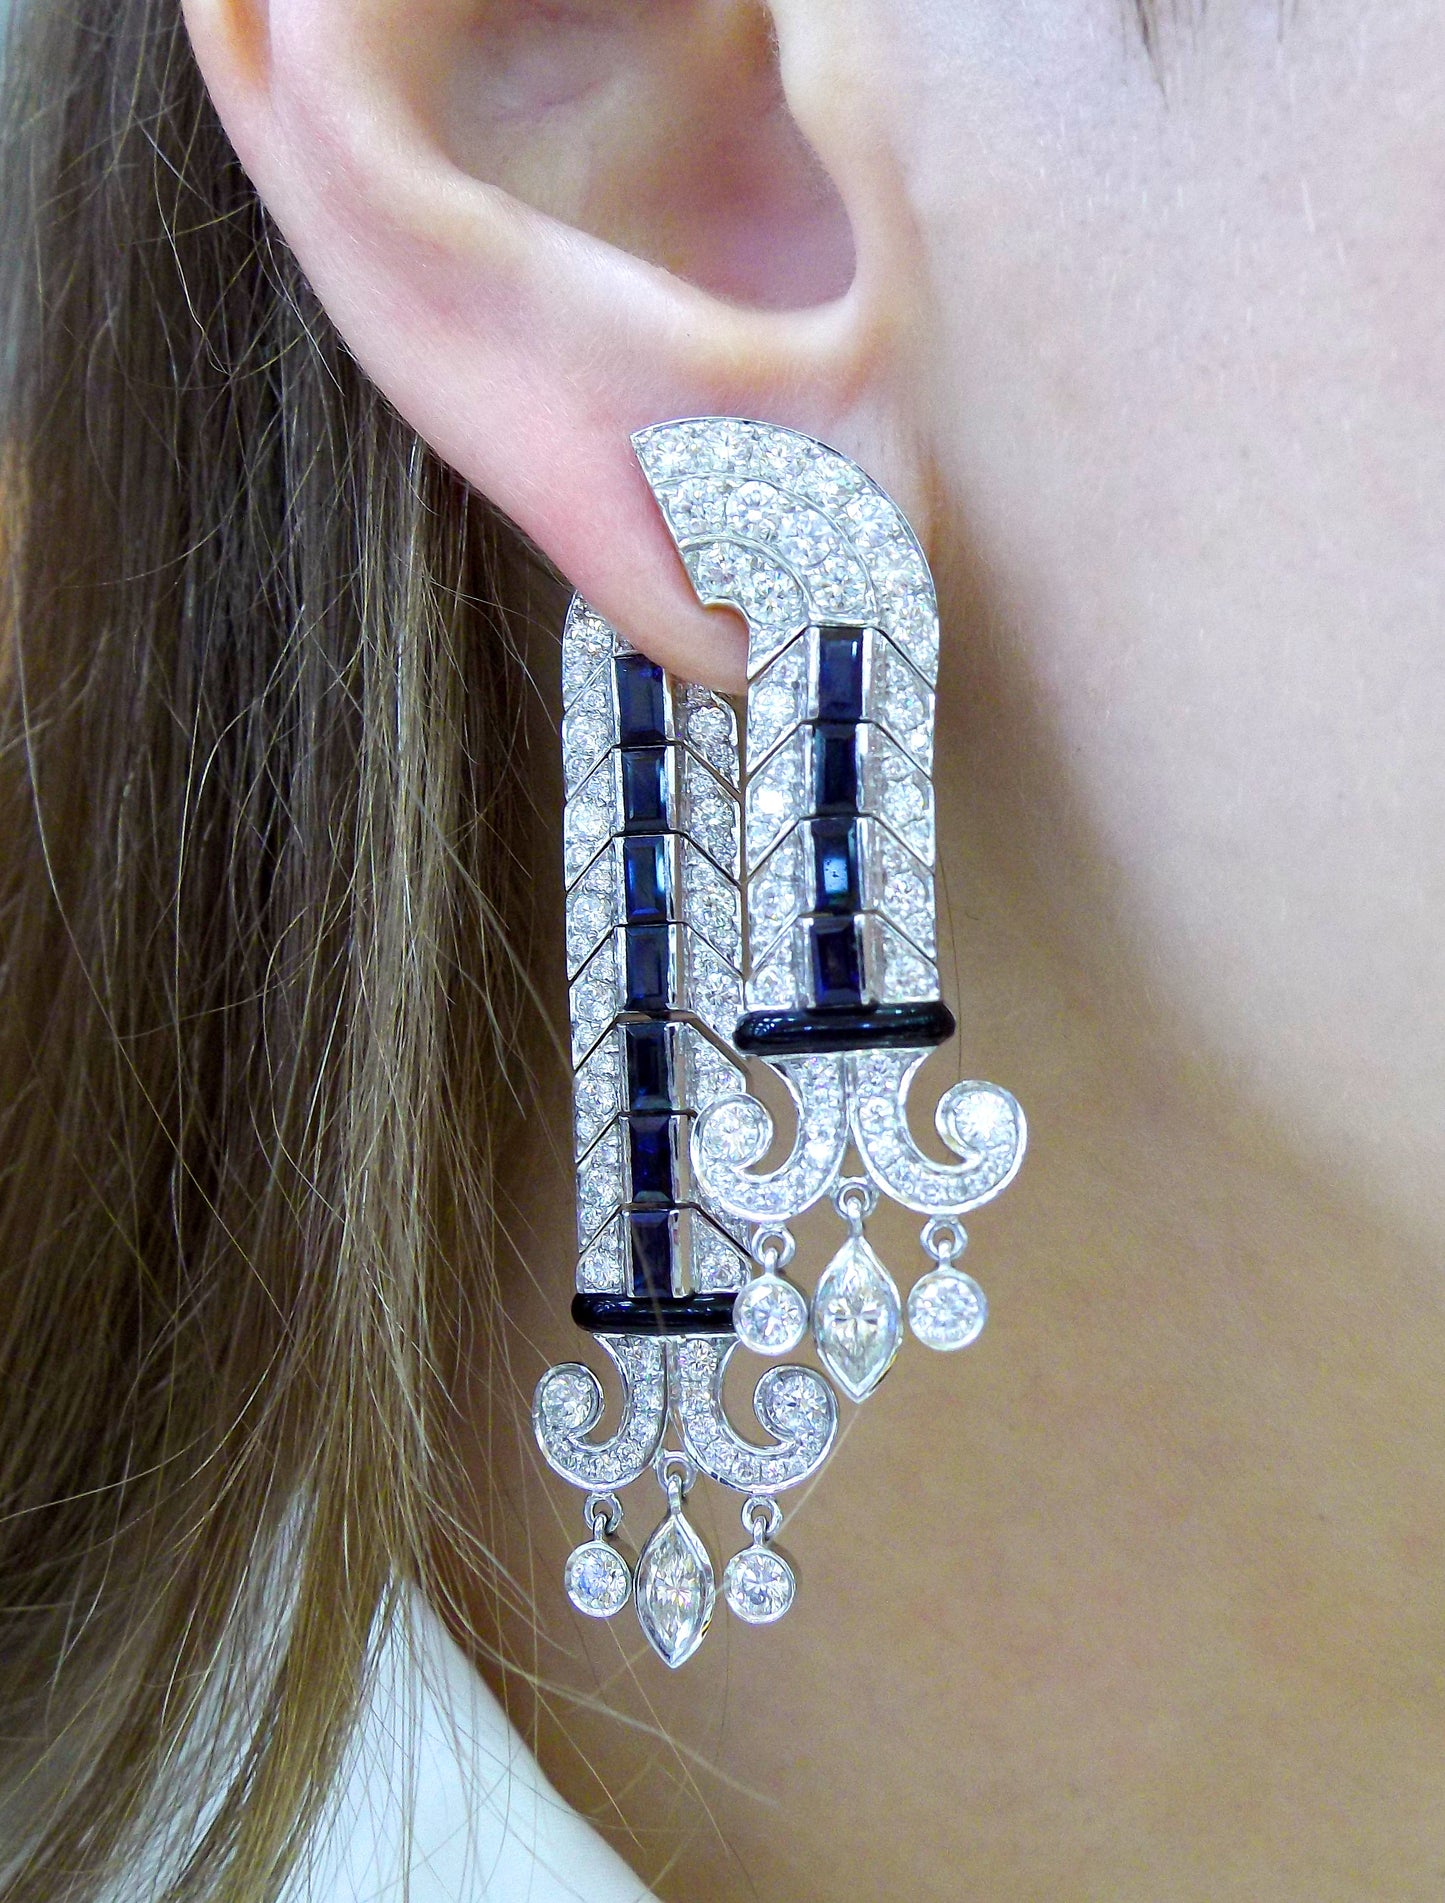 Pair of Sapphire, Diamond and Enamel Earrings